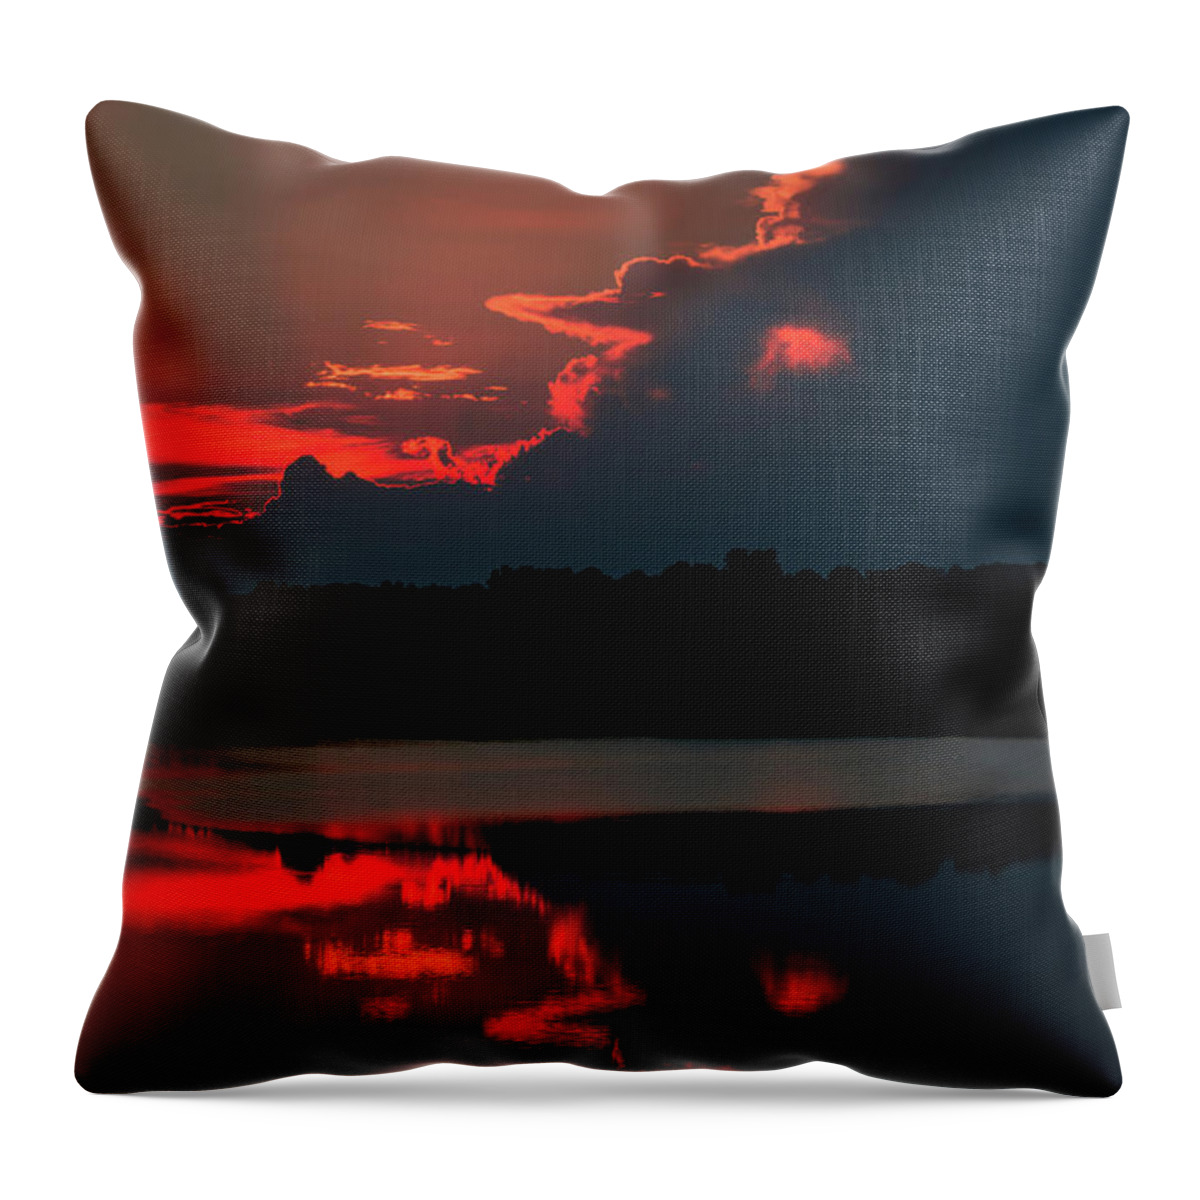 Sunset Throw Pillow featuring the photograph Fiery Evening by James L Bartlett